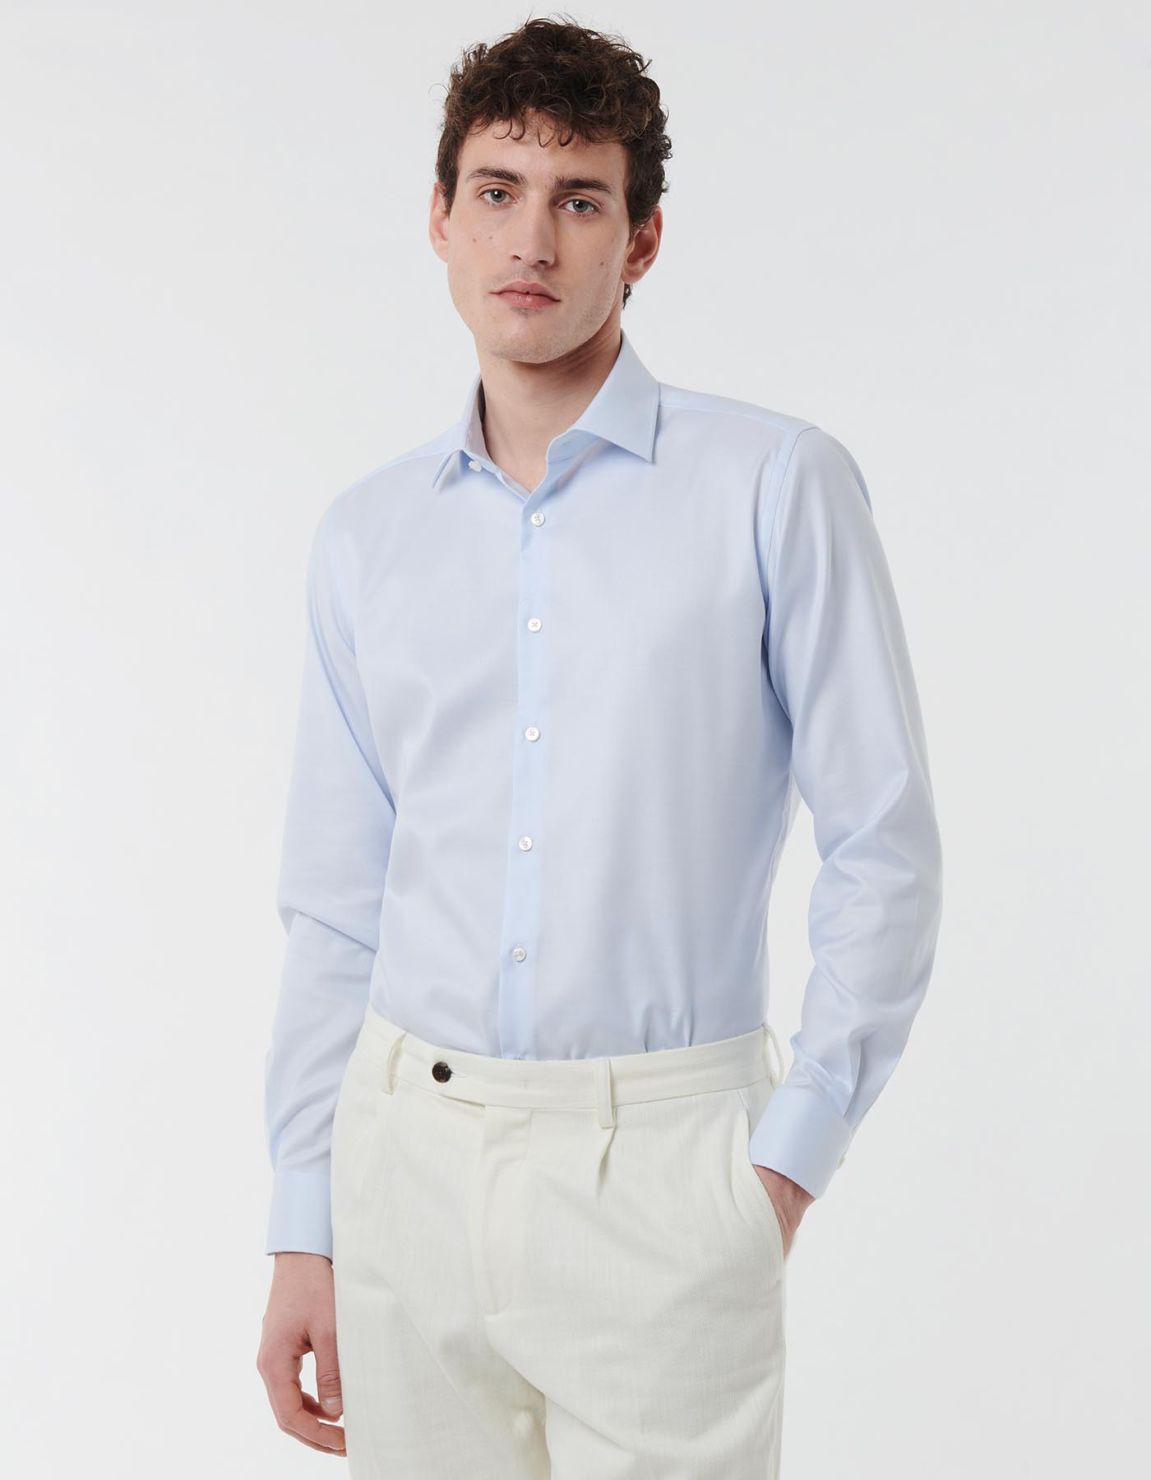 Light Blue Textured Pattern Shirt Collar spread Tailor Custom Fit 3